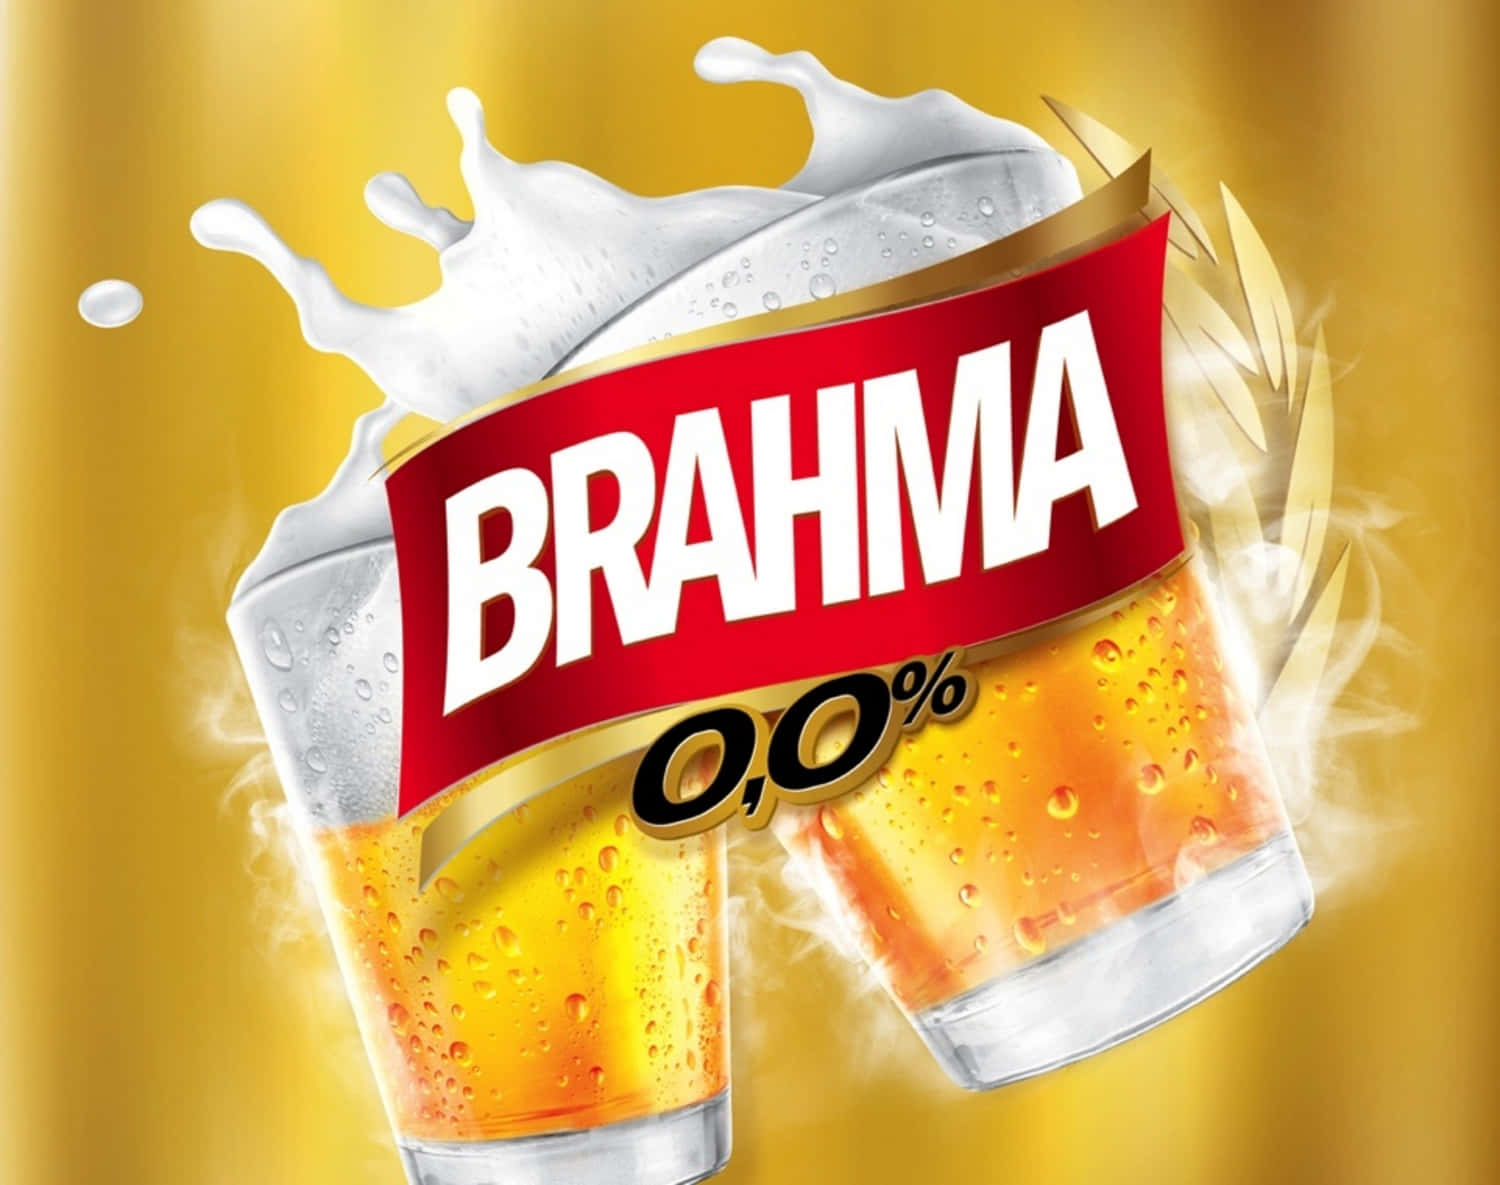 Diseñode Etiqueta De La Cerveza Brasileña Brahma Zero Por Ciento Fondo de pantalla